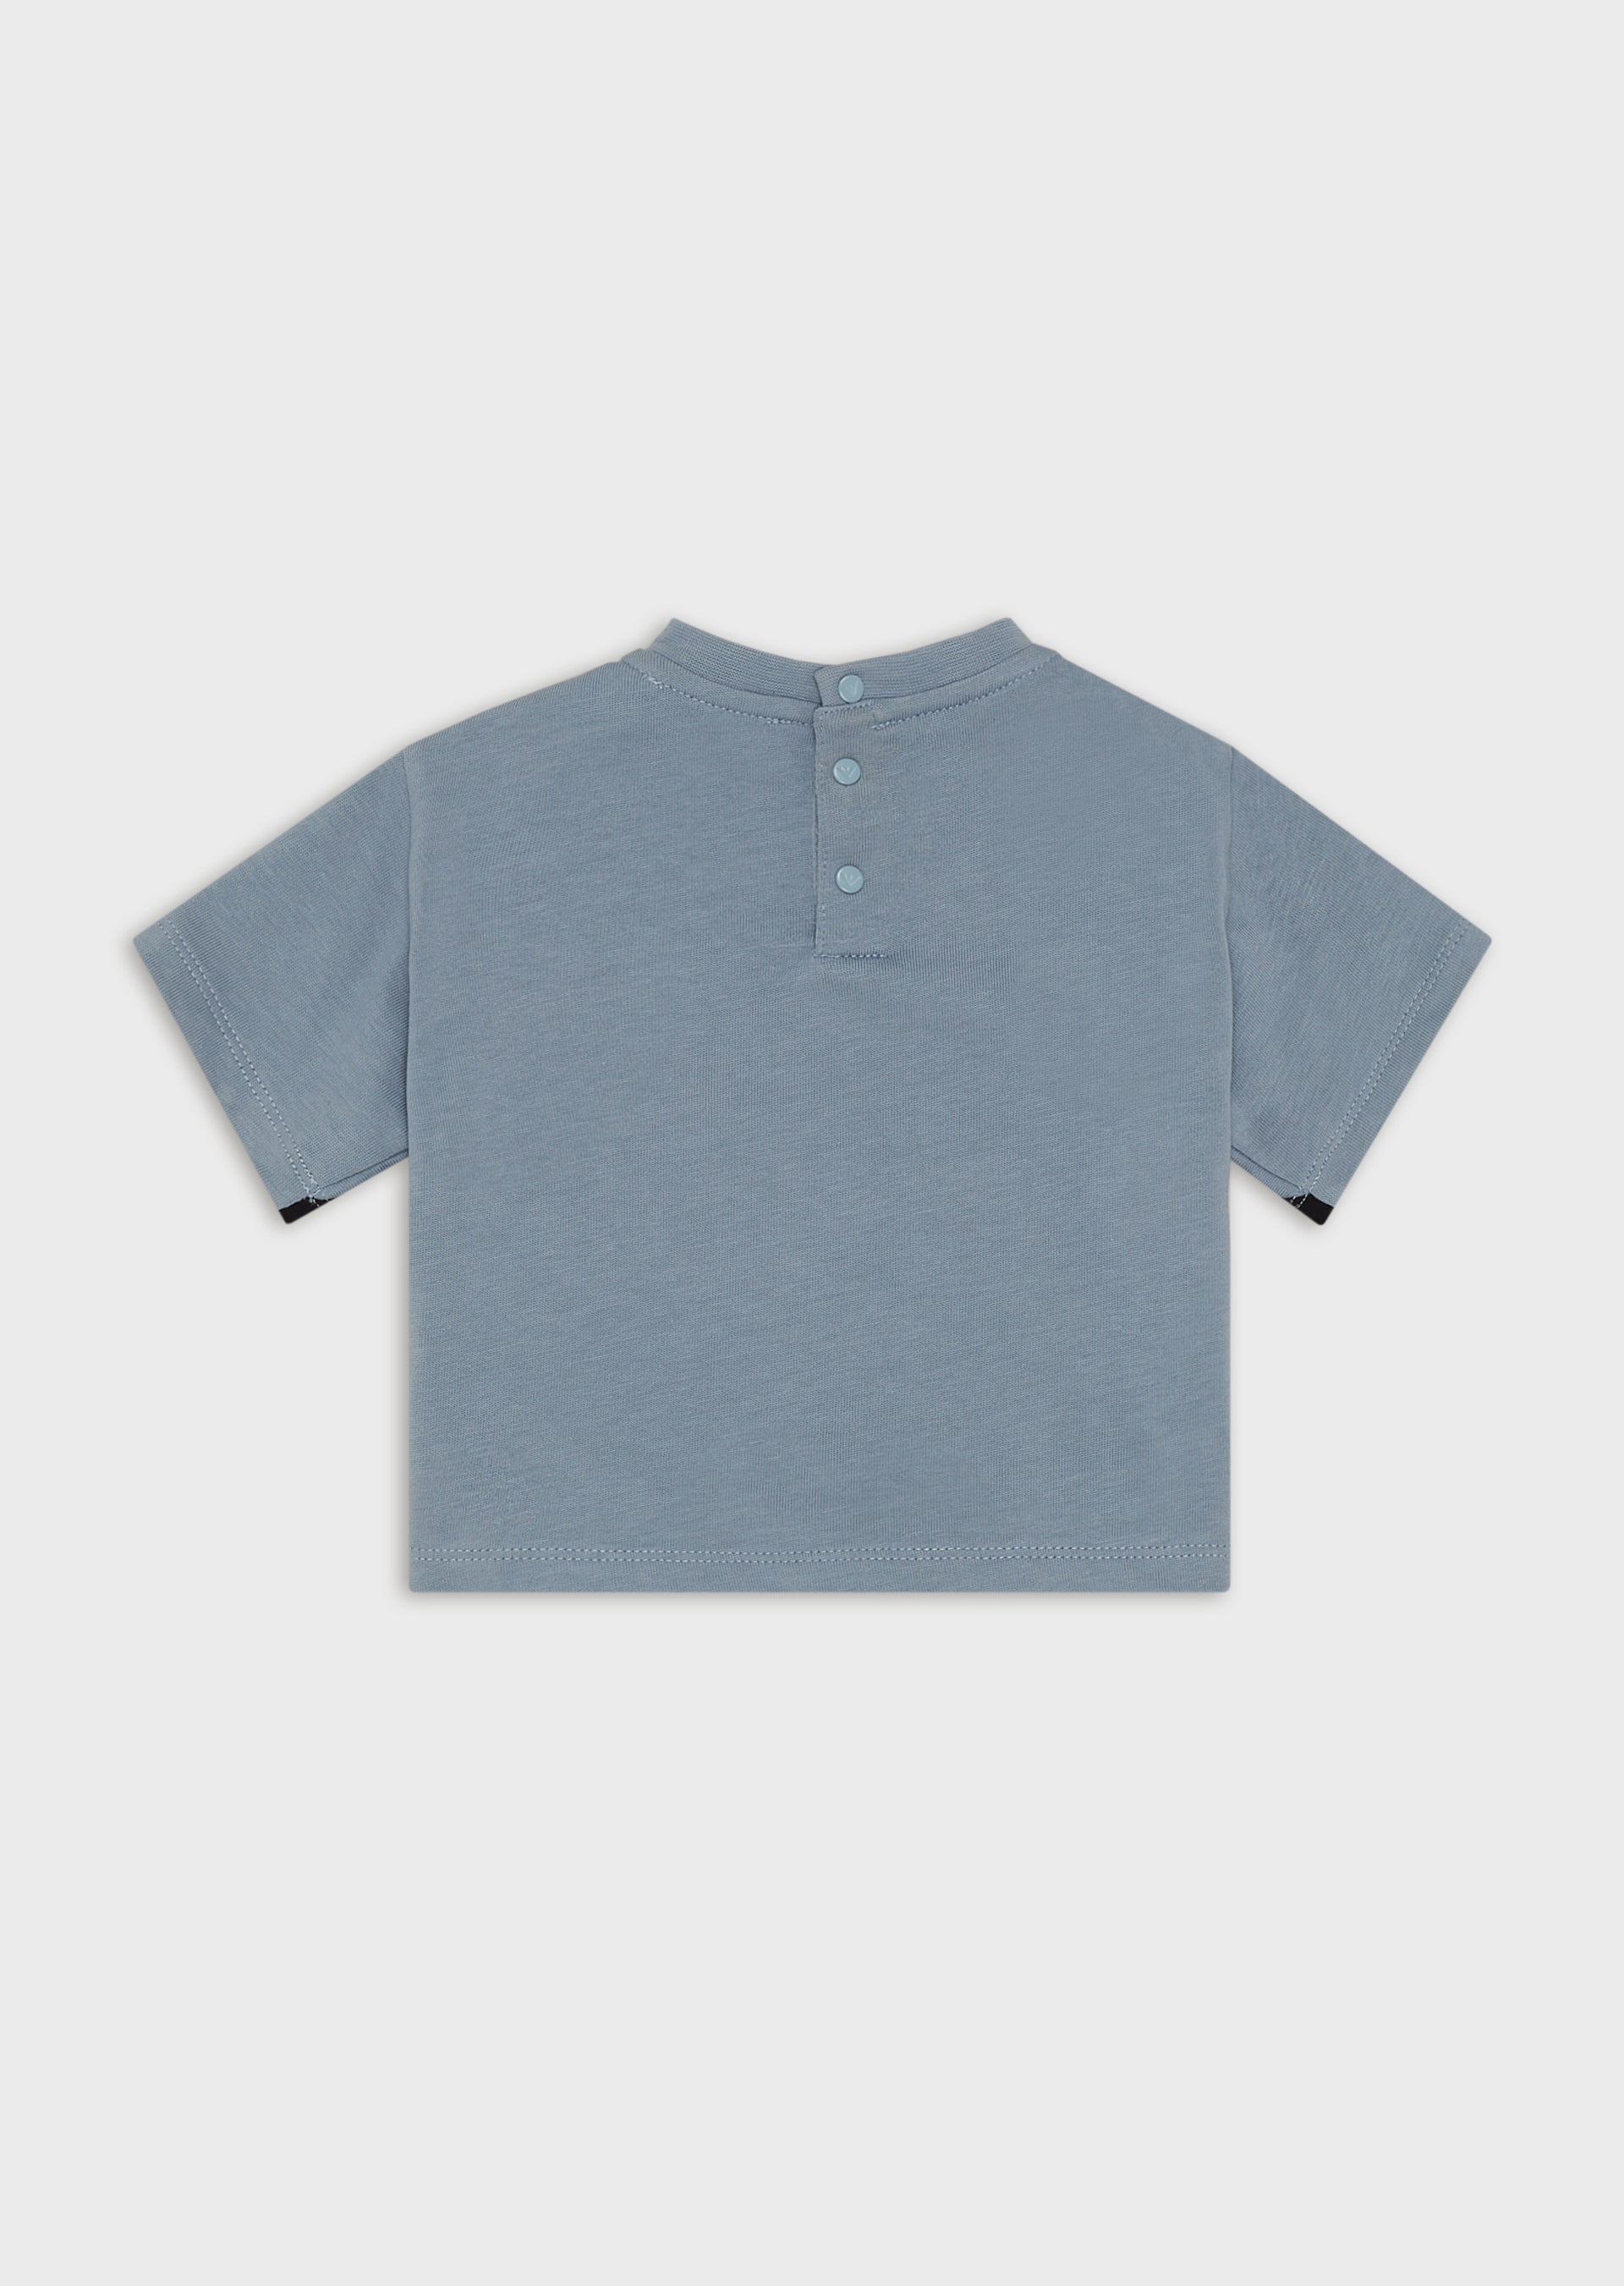 Emporio Armani T-Shirt Style:3Rhtja